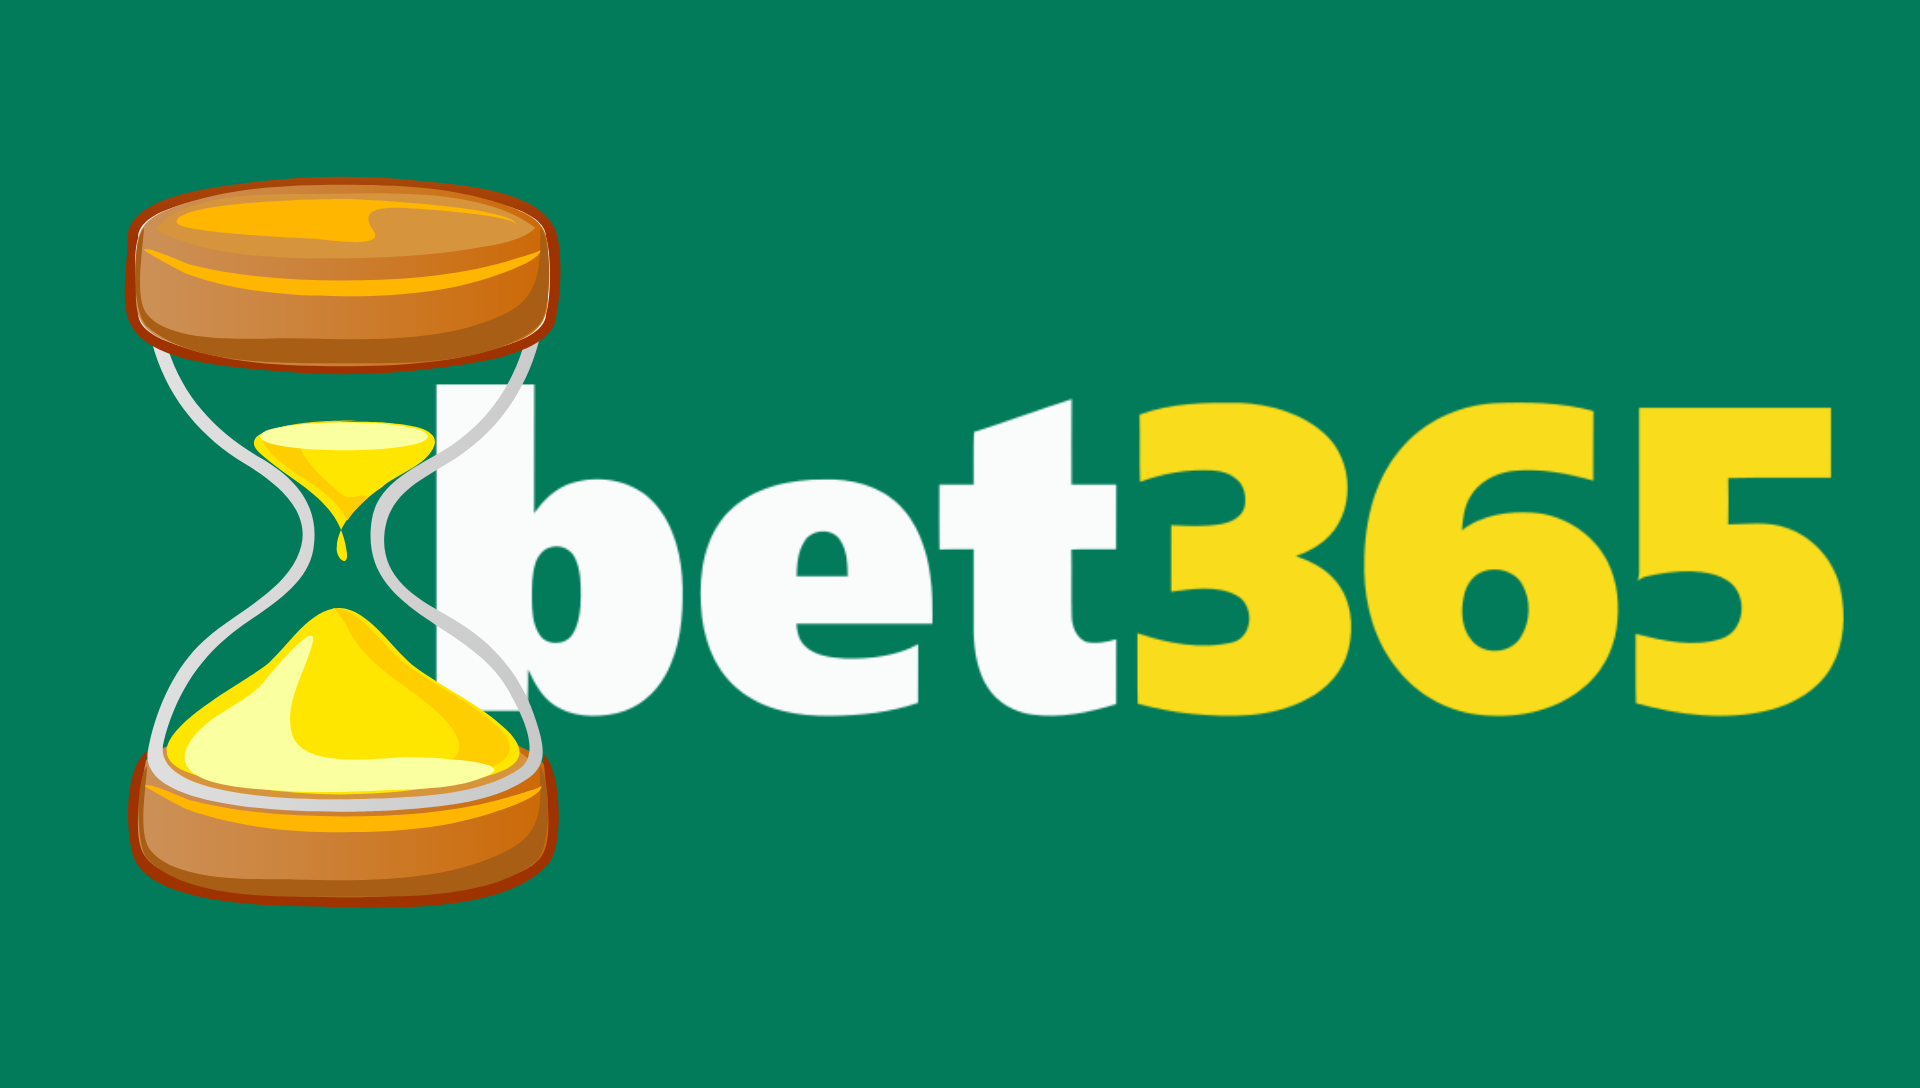 brasil bet365 com br